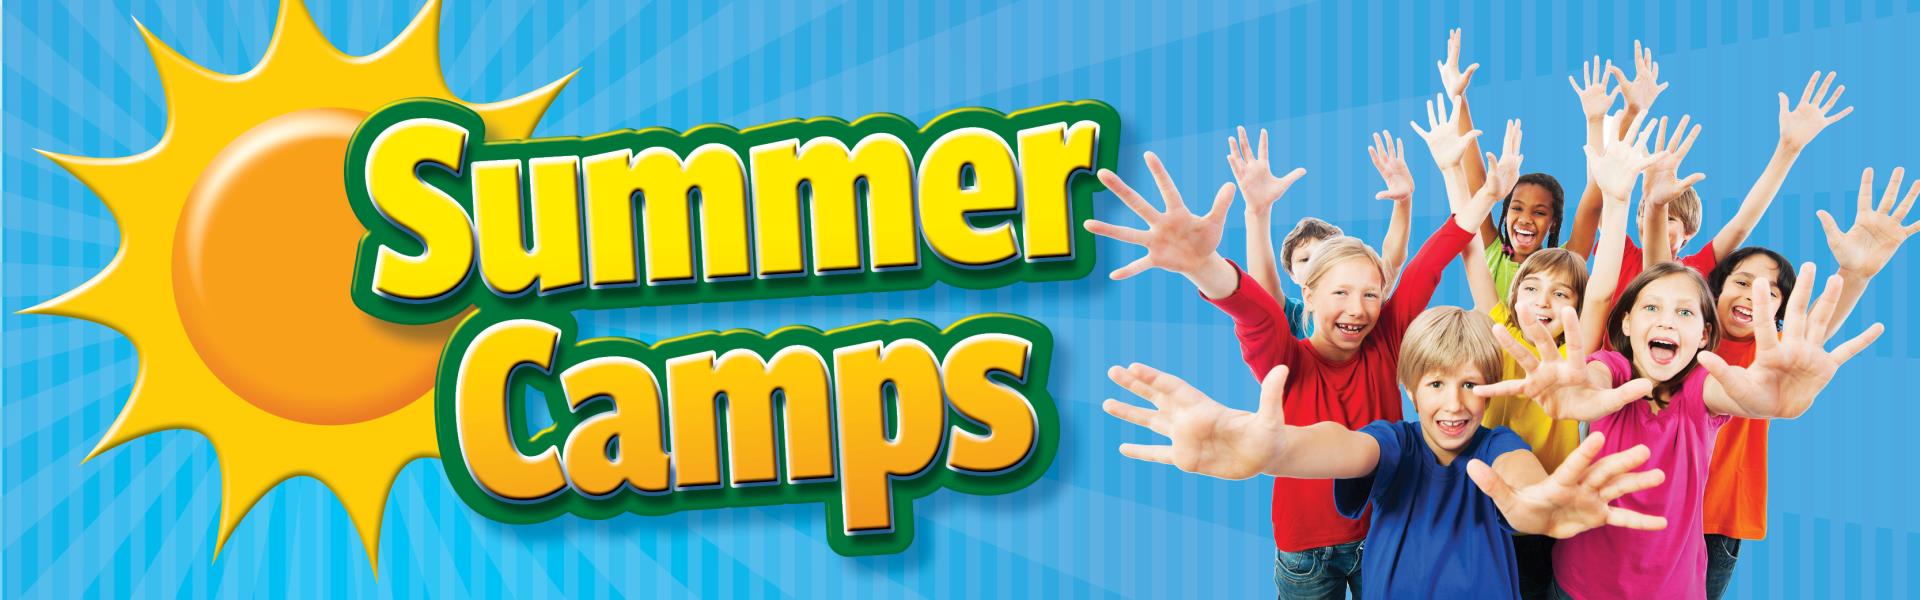 22-861664801 Summer Camps Banner 800x250